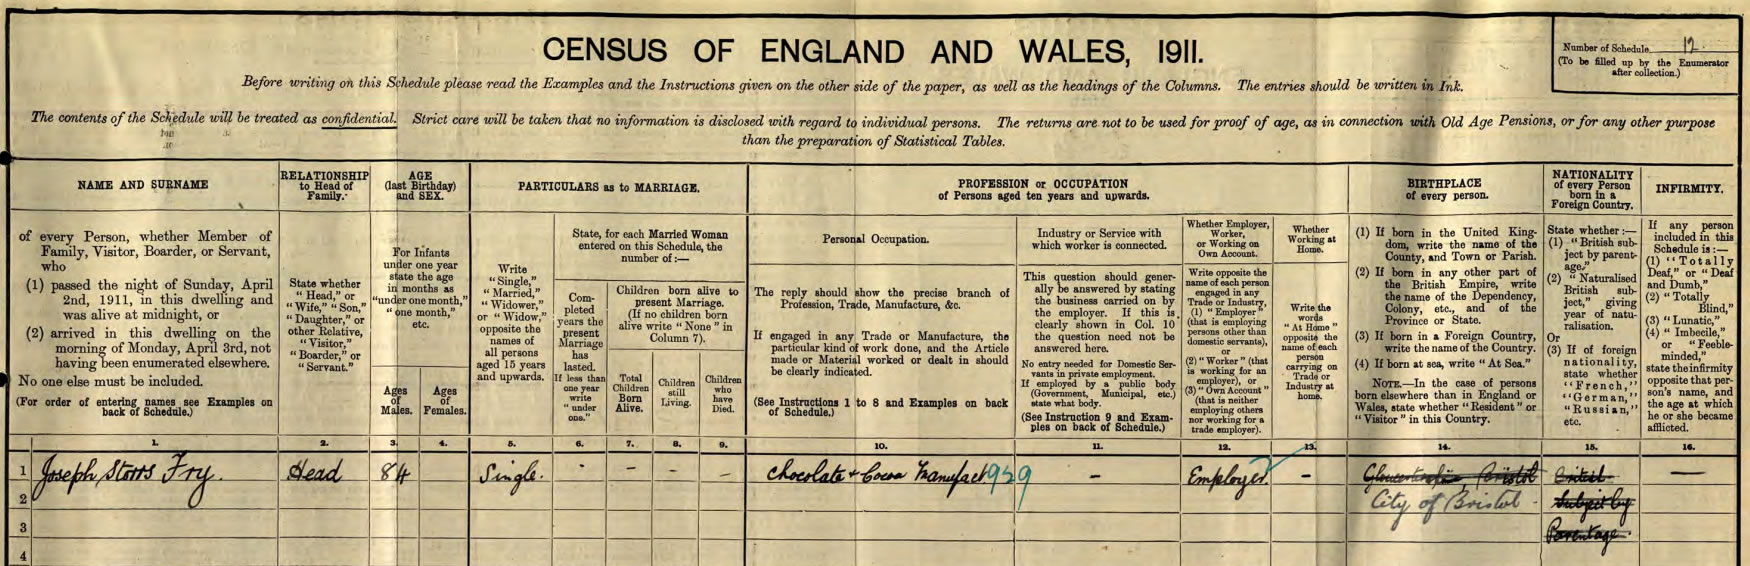 Joseph Storrs Fry II on the 1911 Census